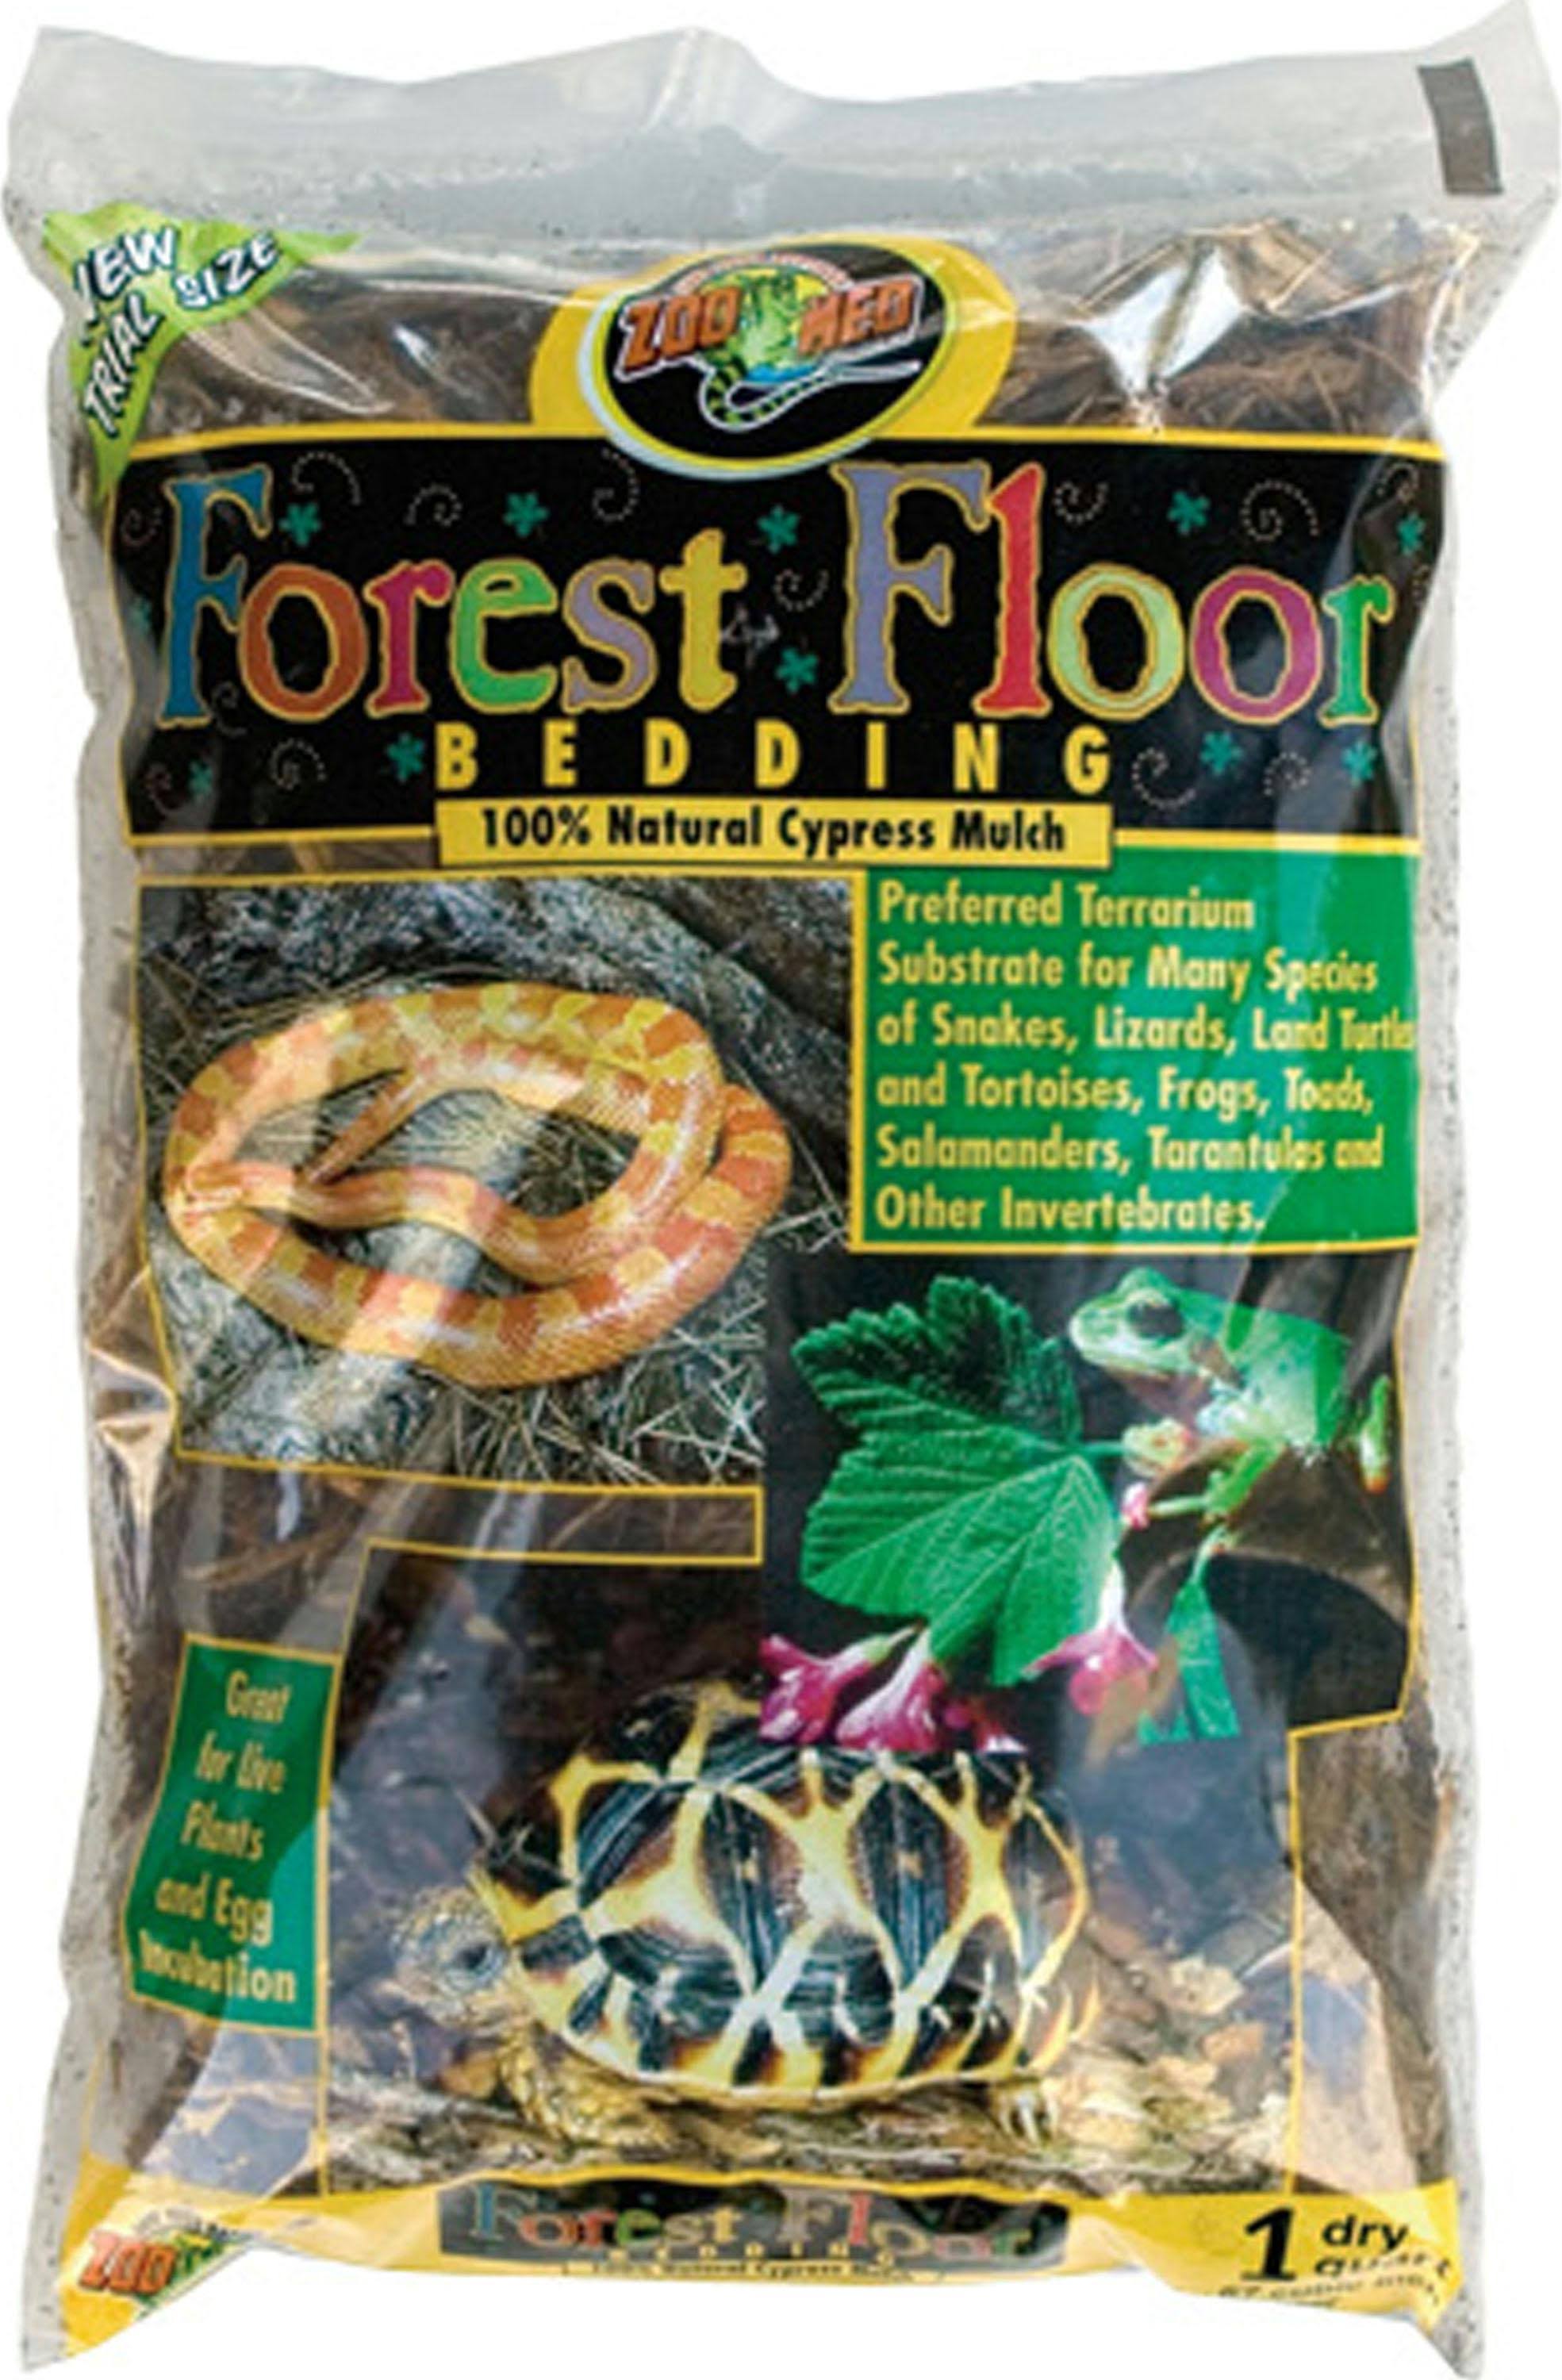 Forest Floor Bedding